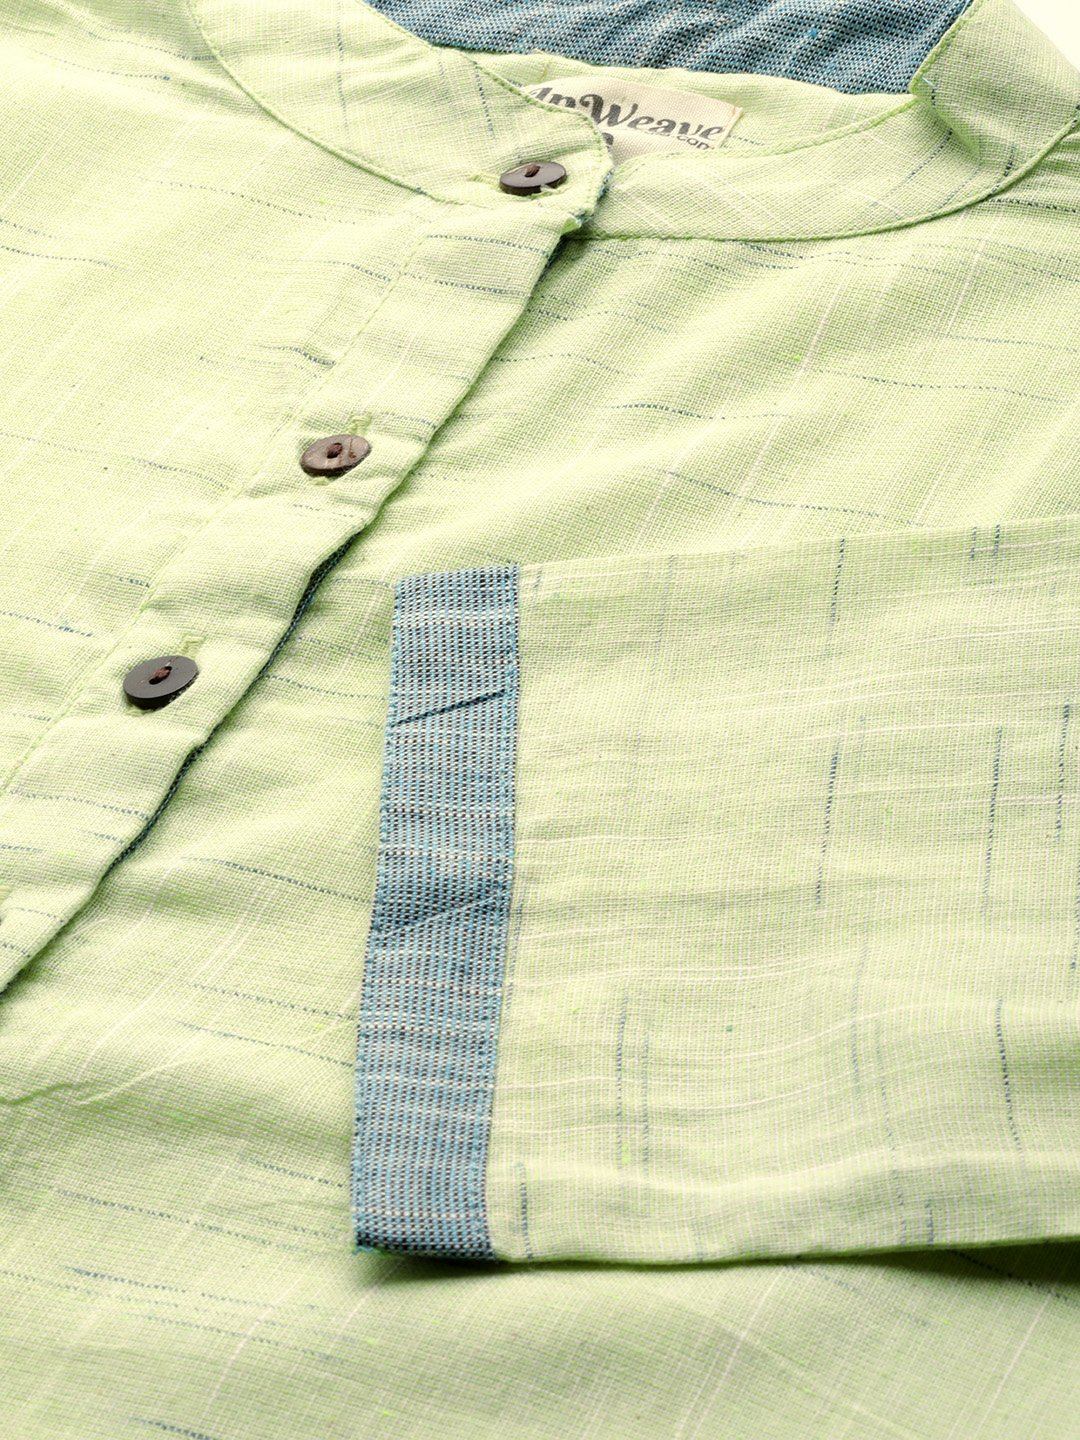 Handloom cotton kurta in green